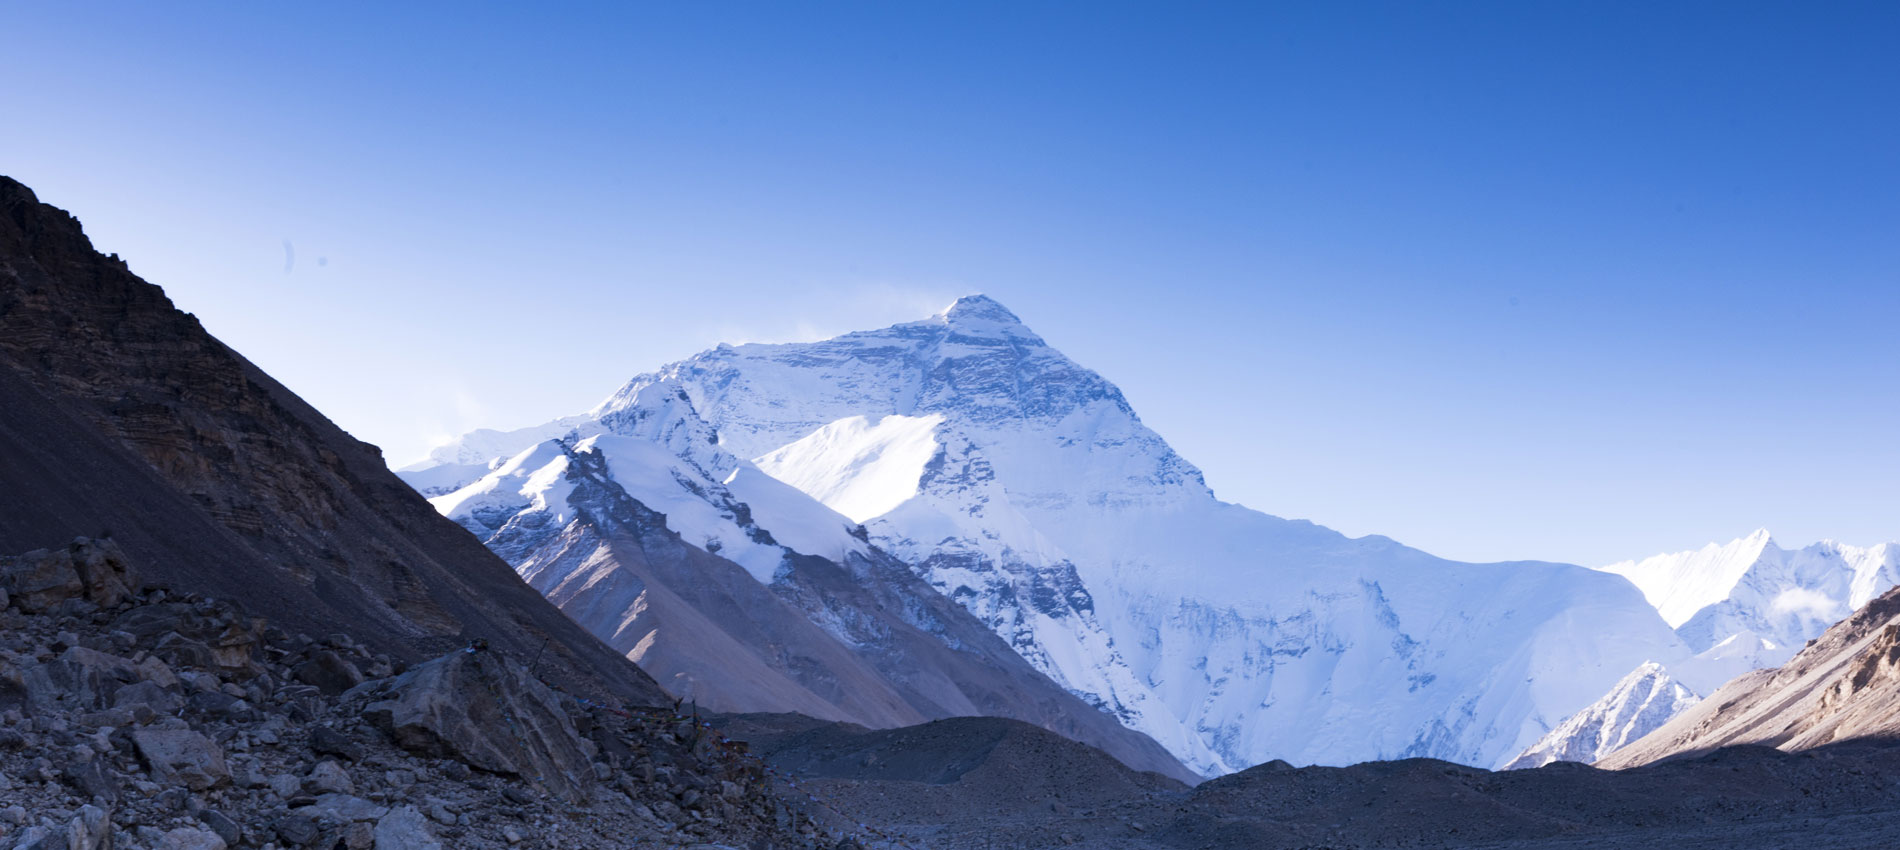 Everest Expedition via North Side